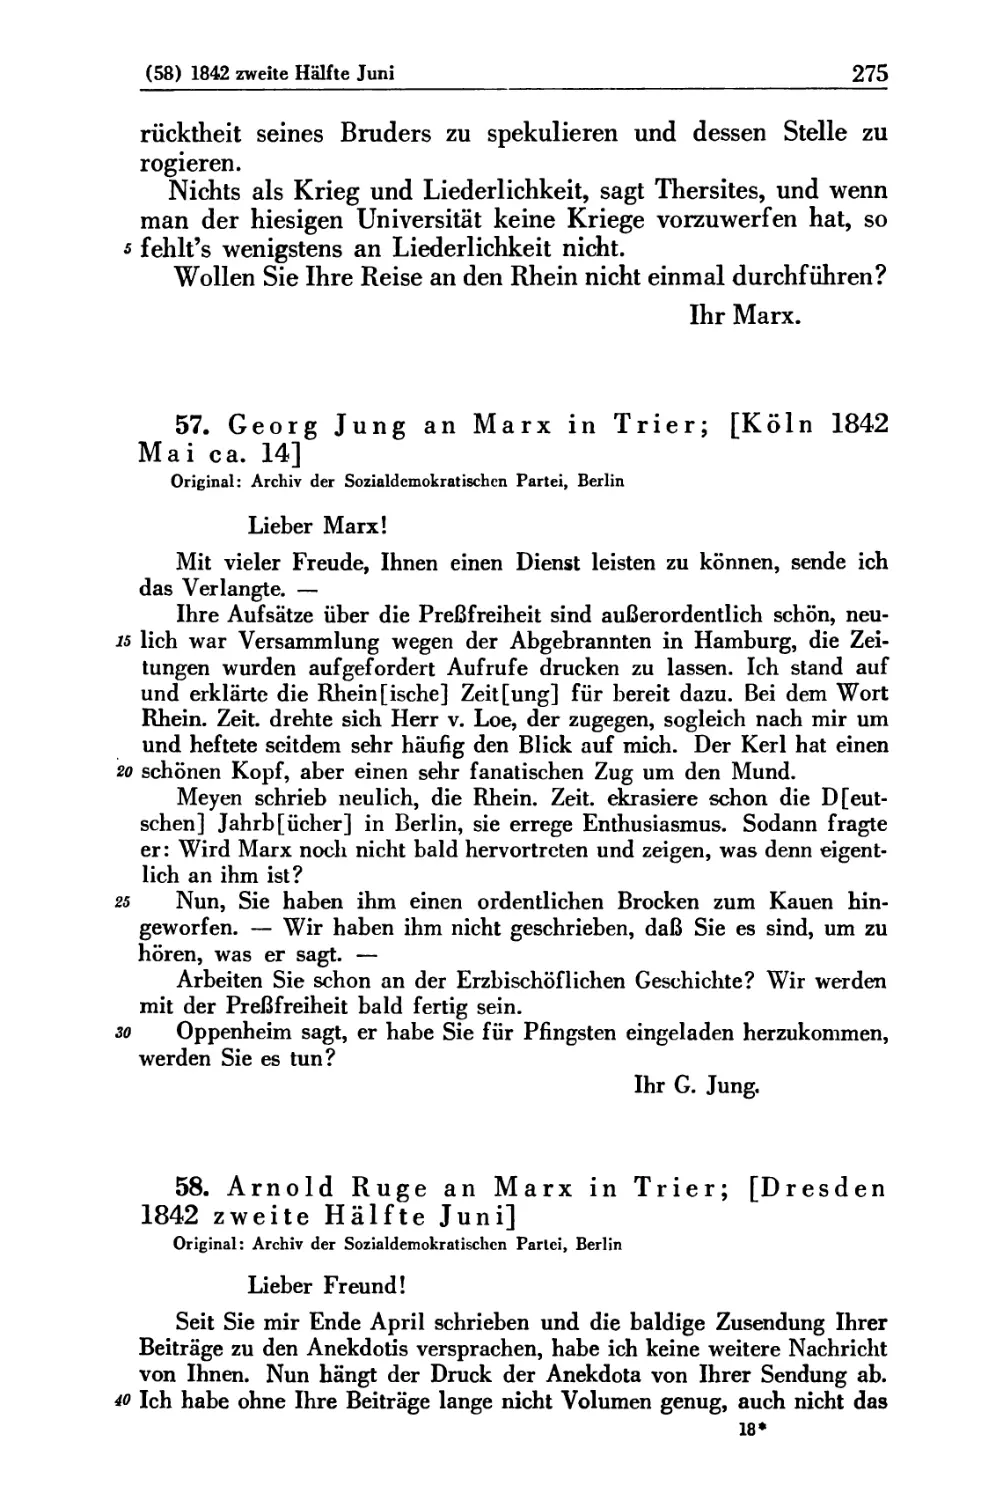 57. Georg Jung an Marx in Trier; [Köln 1842 Mai ca. 14]
58. Arnold Ruge an Marx in Trier; [Dresden 1842 zweite Hälfte Juni]